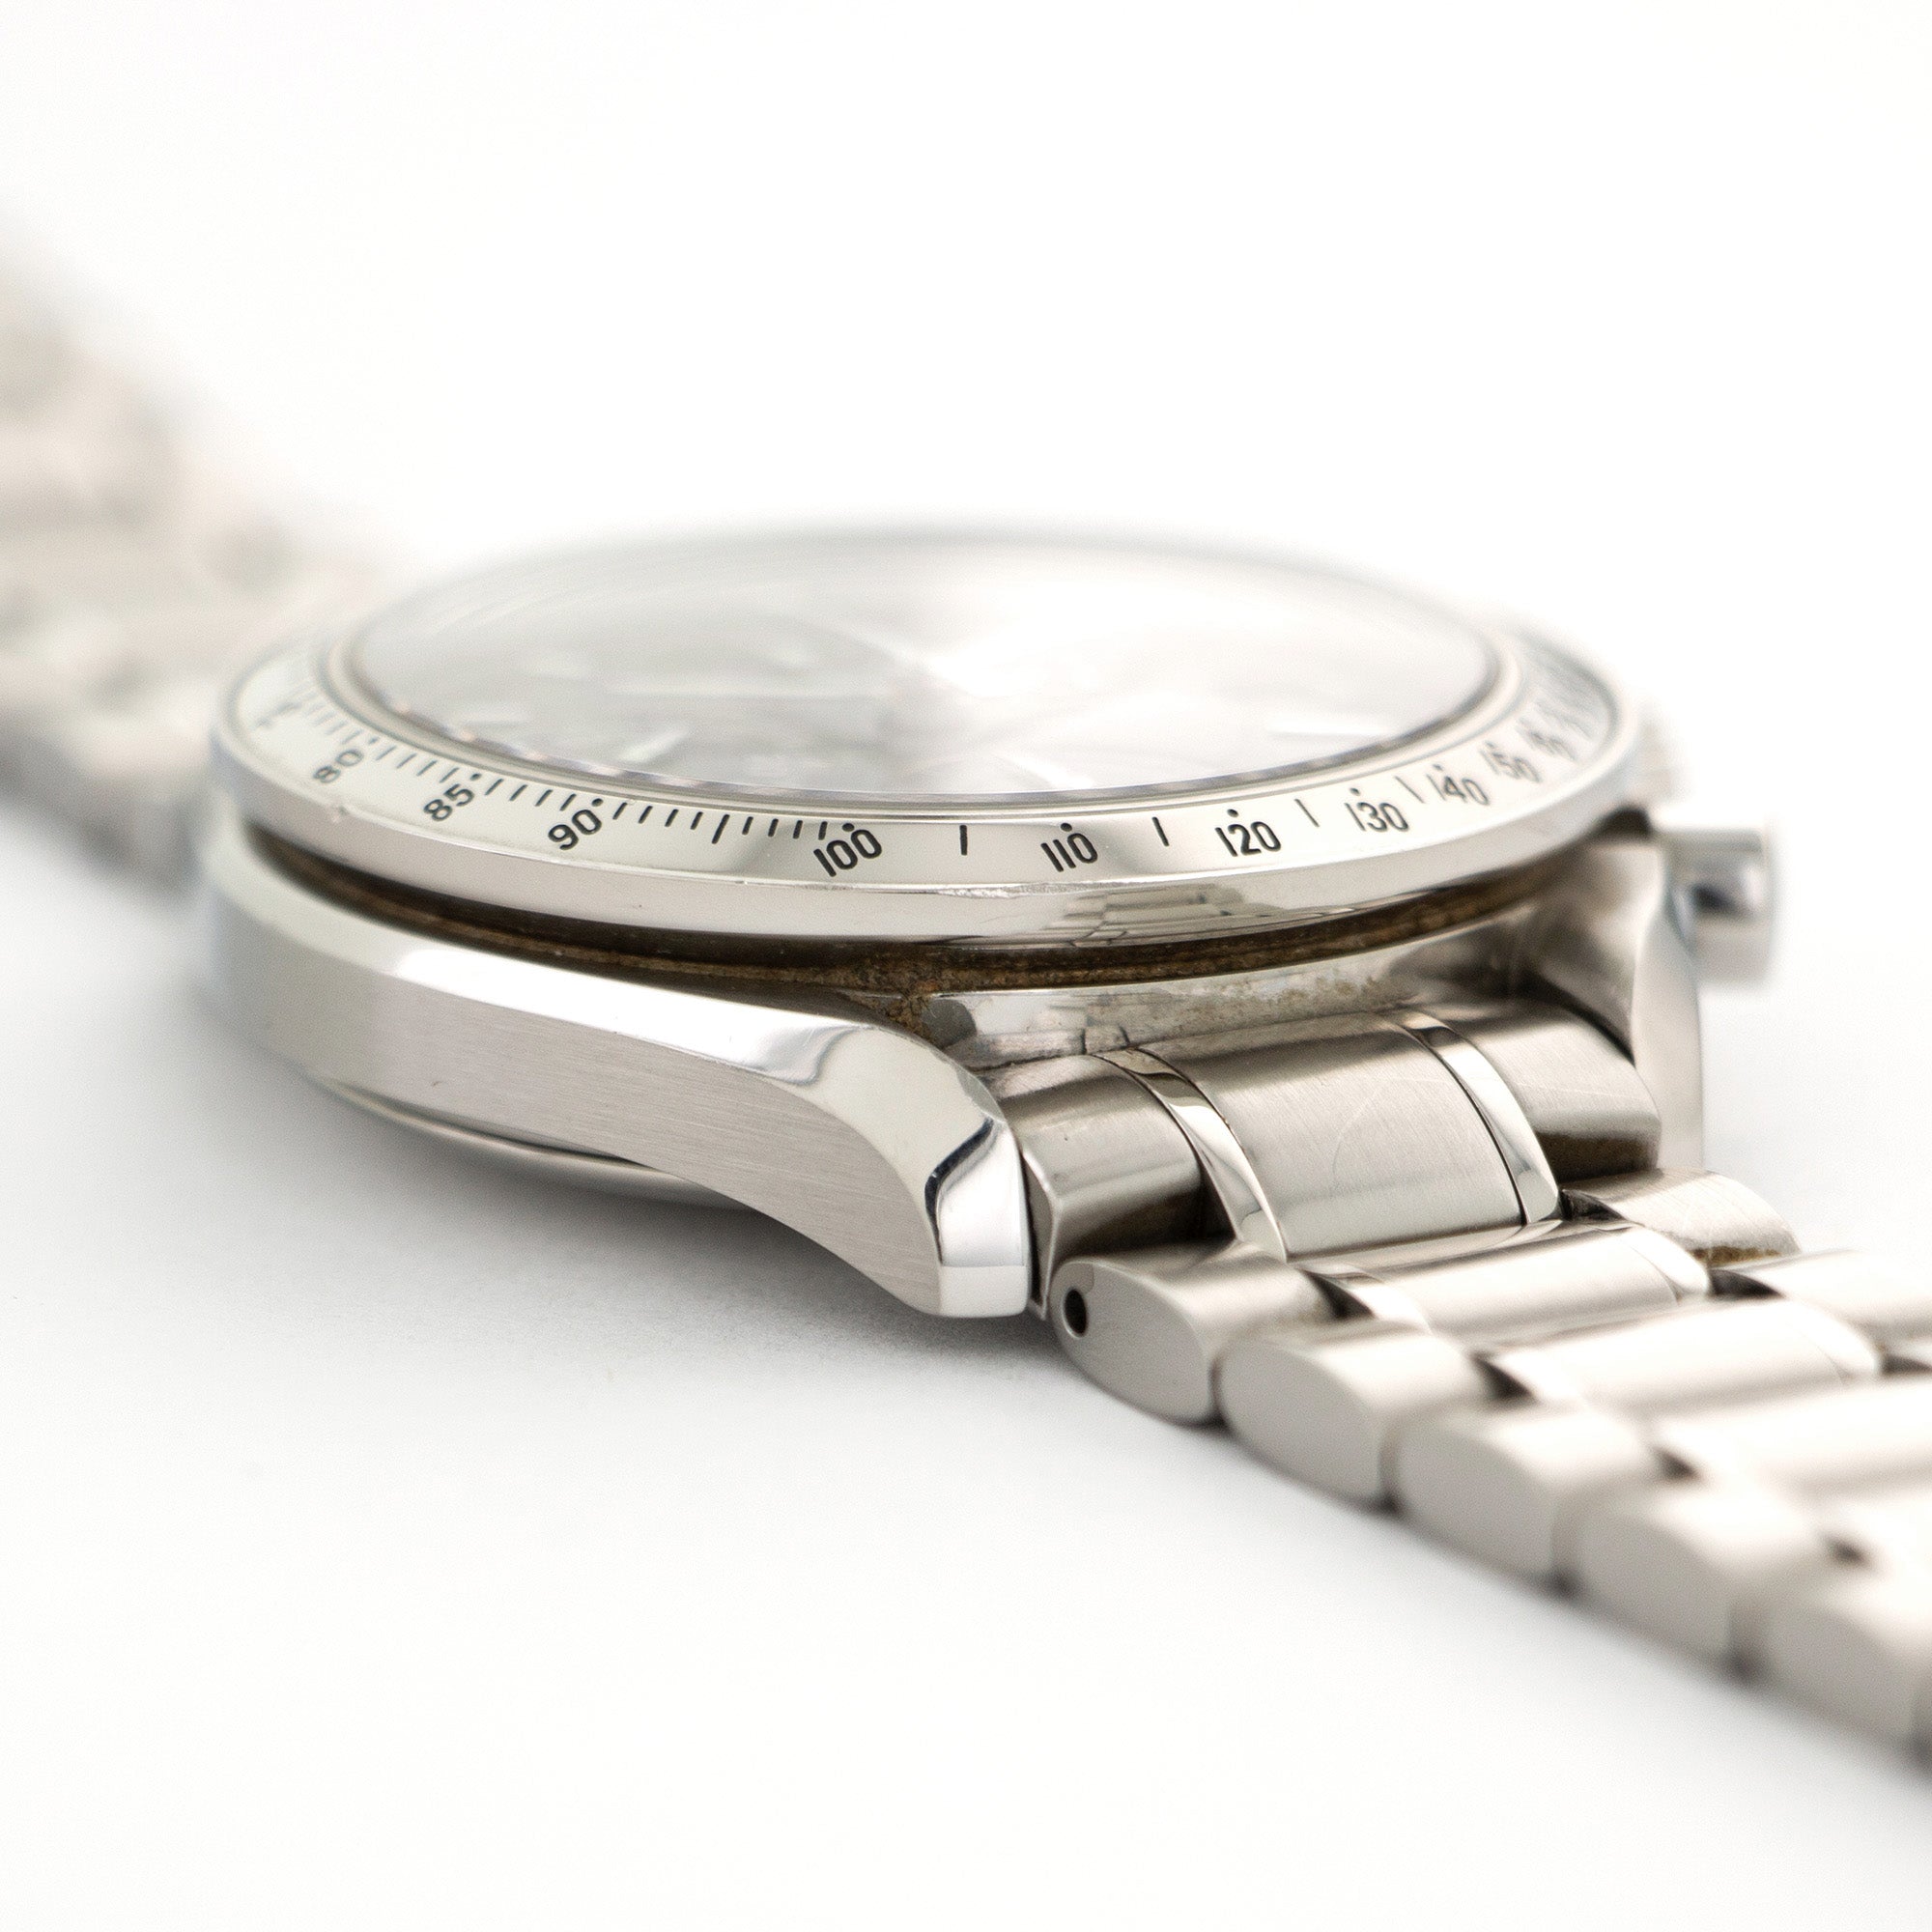 Omega - Omega Speedmaster Chronograph Automatic Watch - The Keystone Watches